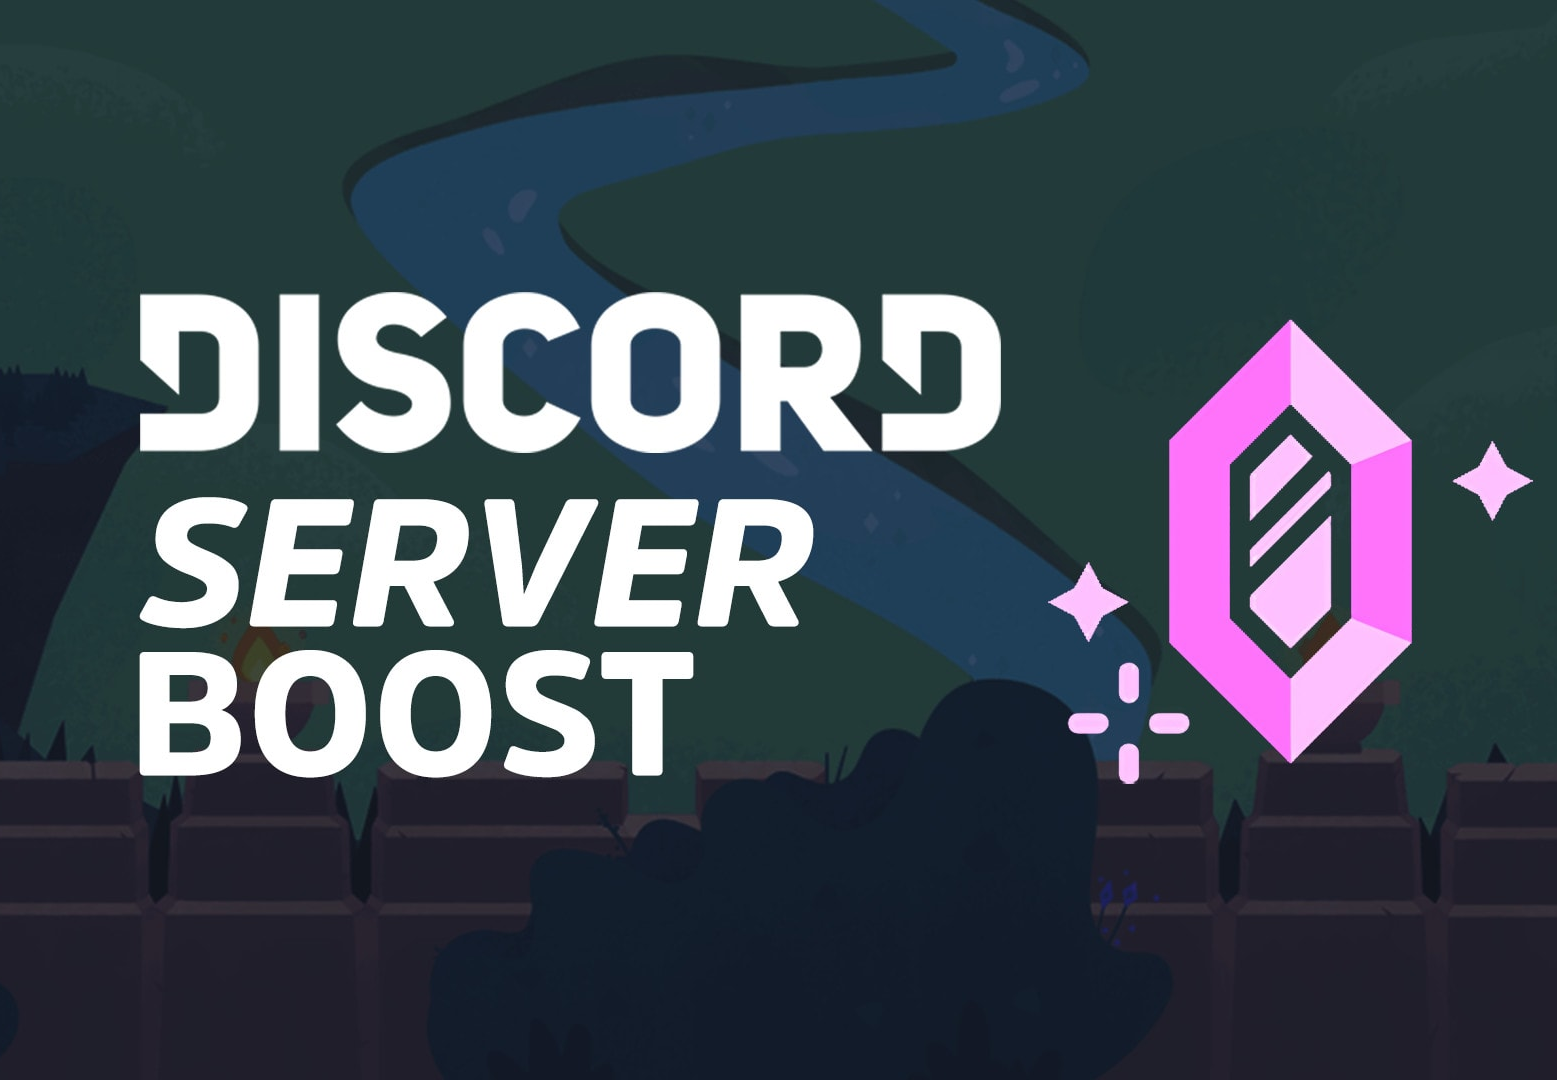 Discord Server - 14x Boost - 1 Month